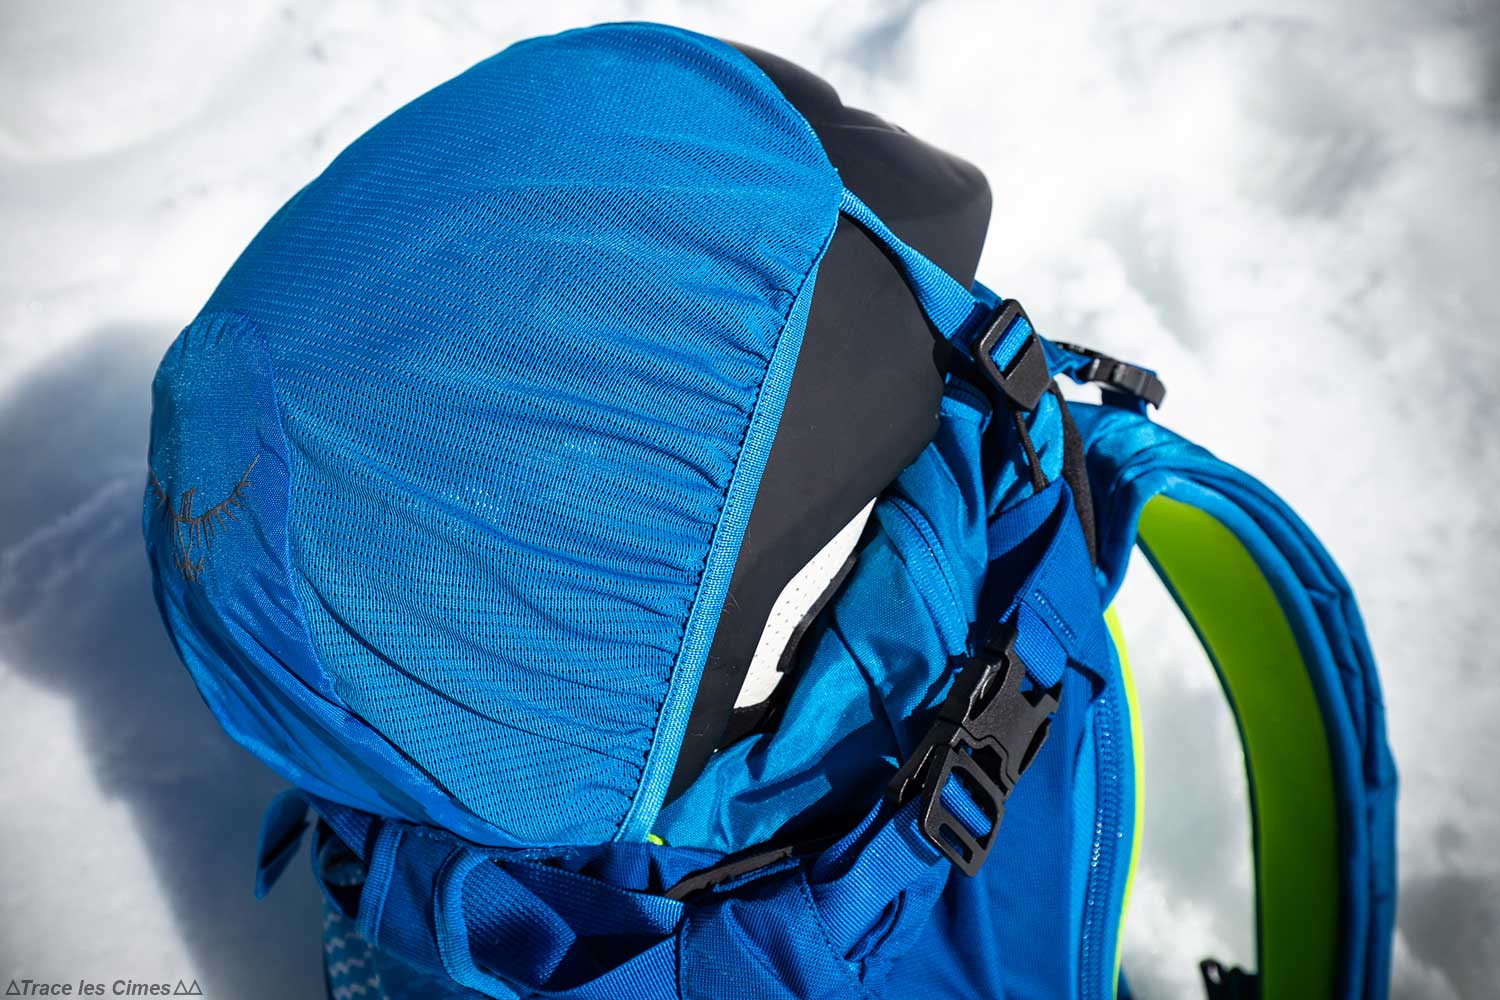 Osprey Kamber 30 sac à dos ski-alpinisme